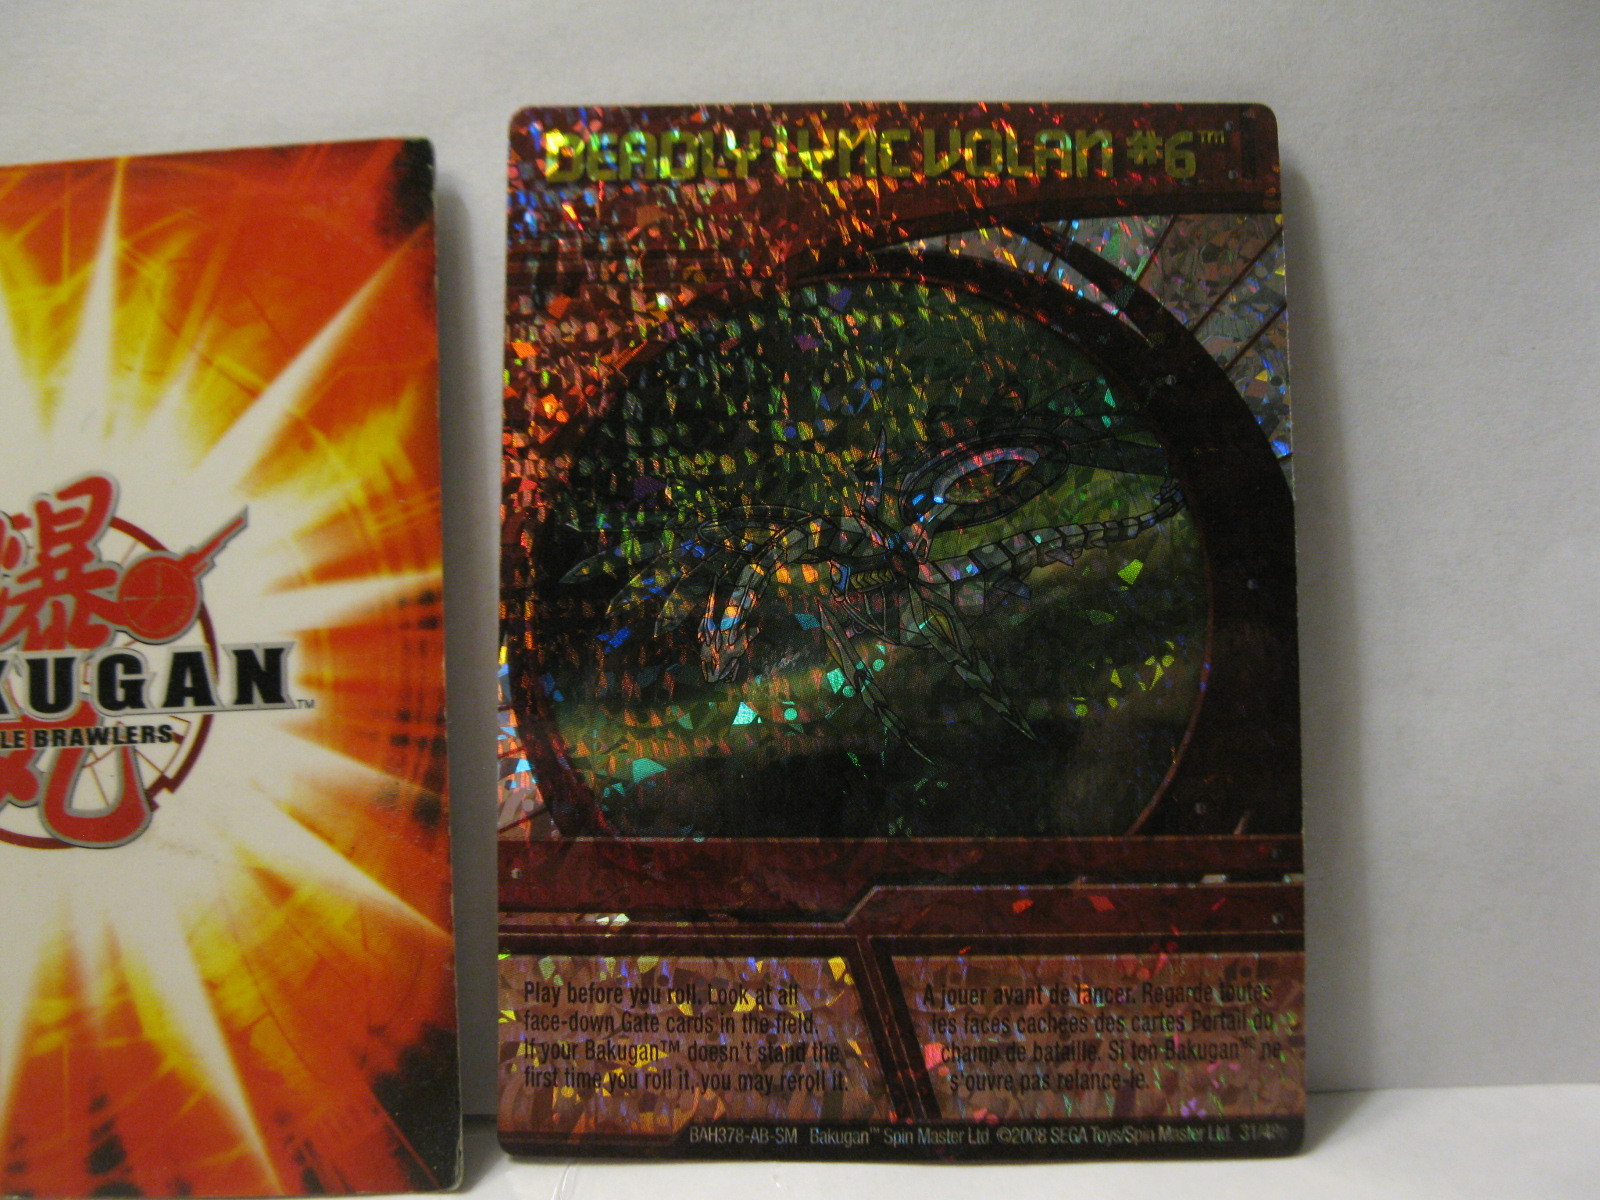 Primary image for 2008 Bakugan Foil Prism Card #31/48e: Deadly Lync Volan #6 ( BAH378-AB-SM ) 